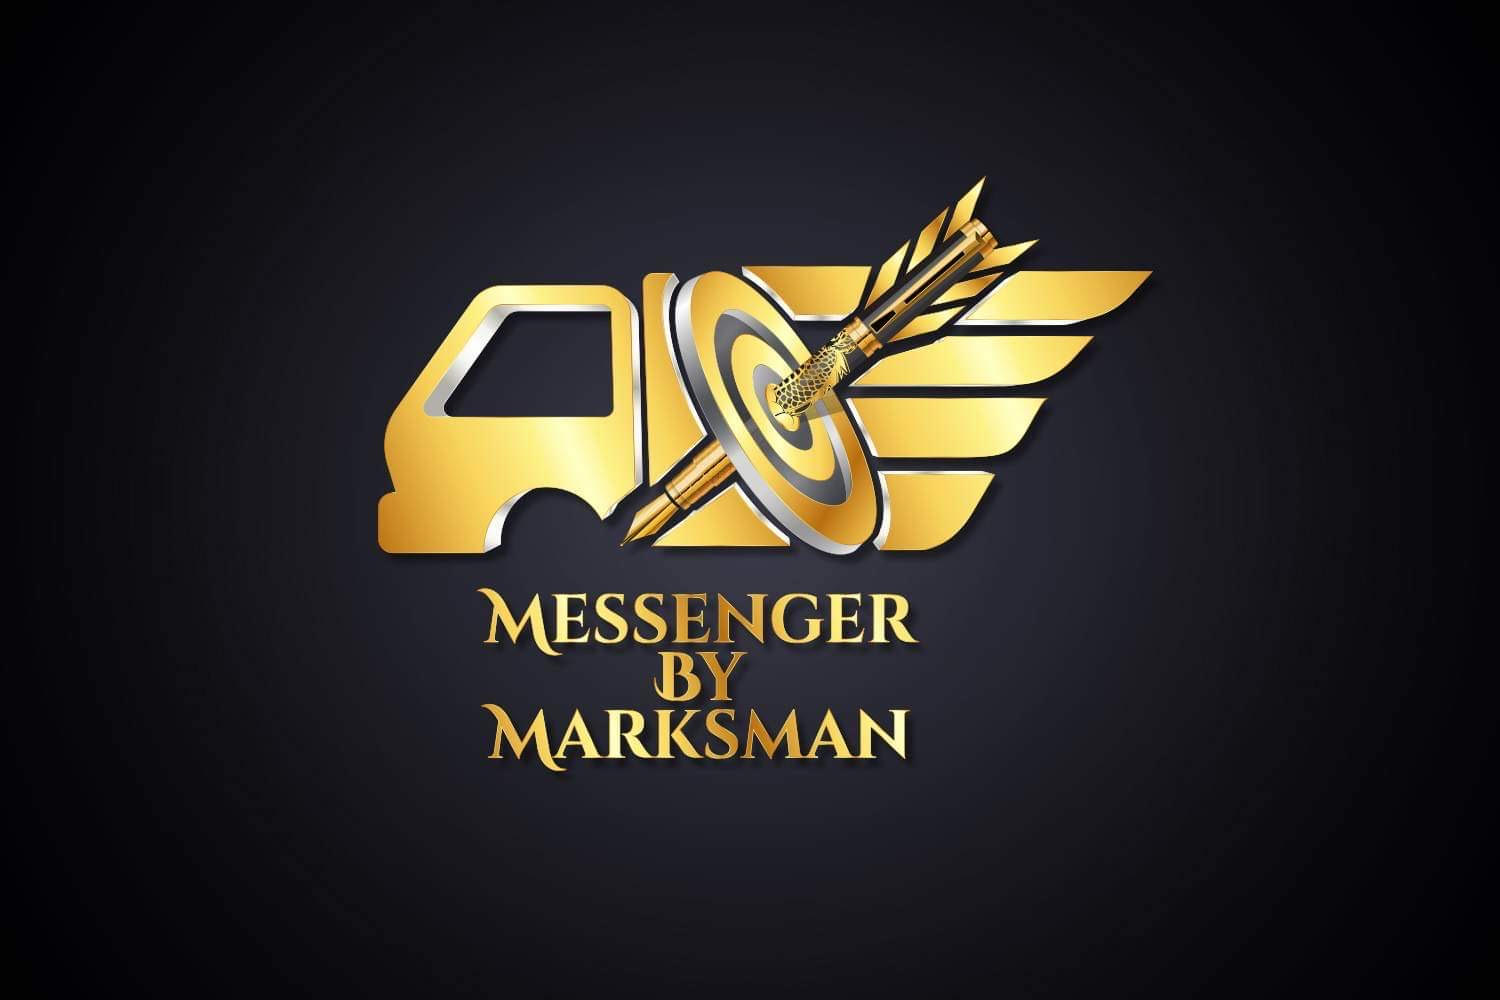 Messenger by Marksman